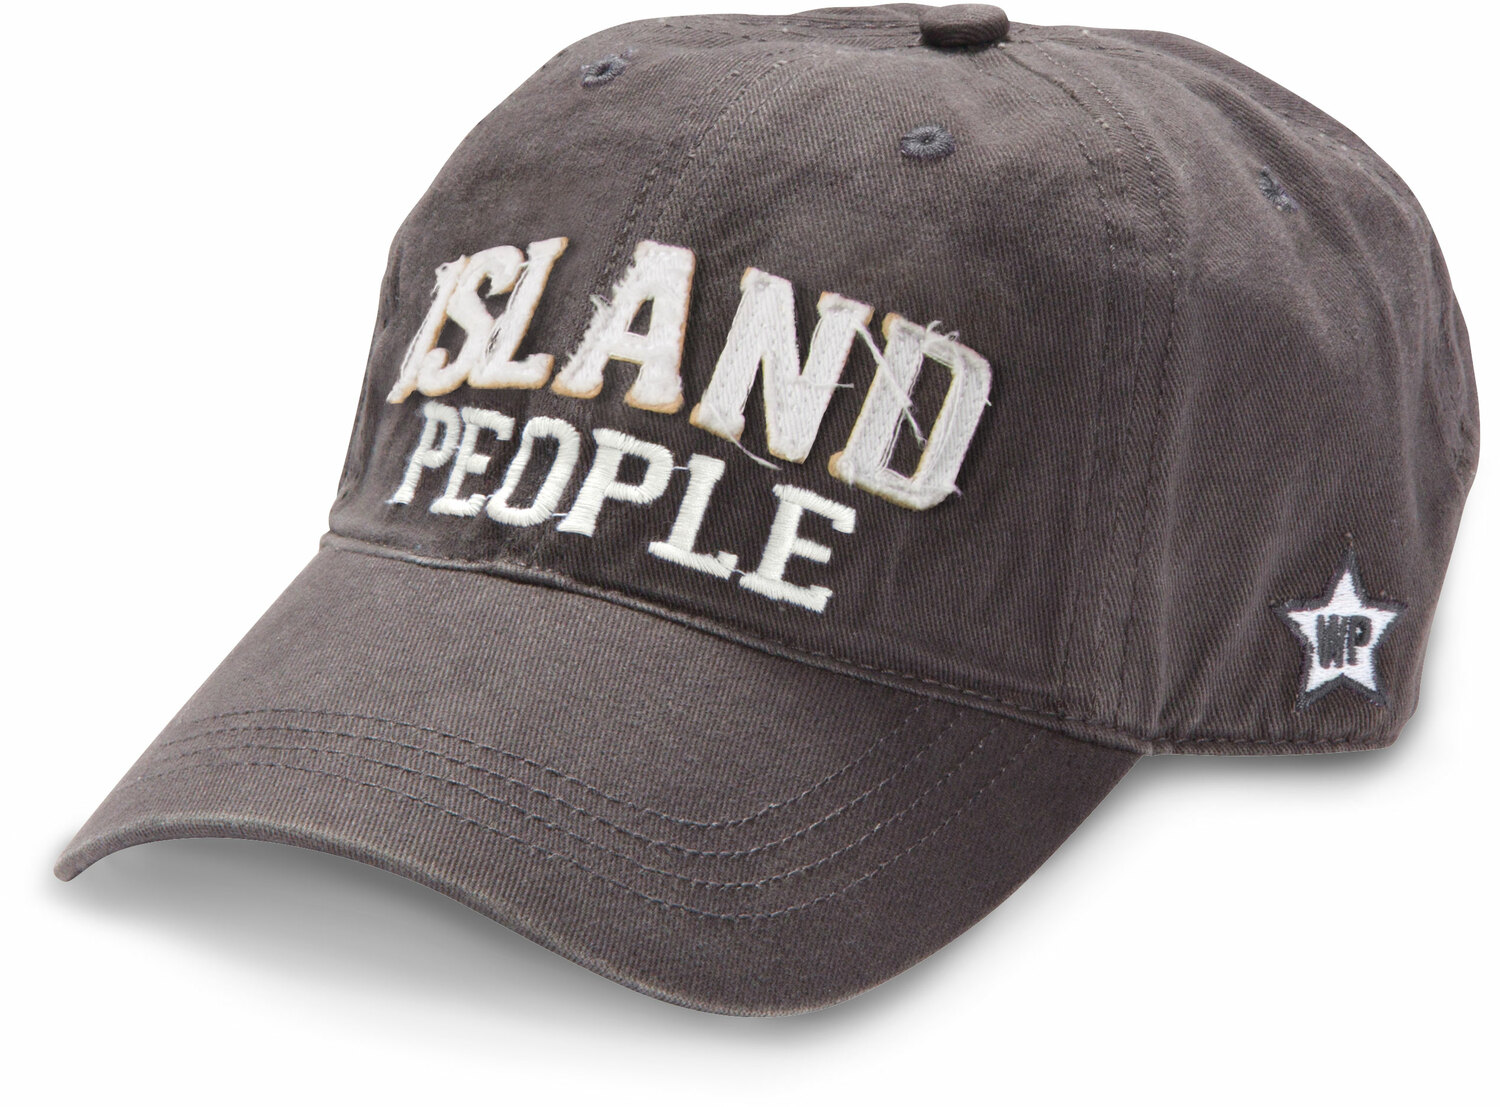 Island People by We People - Island People - Dark Gray Adjustable Hat